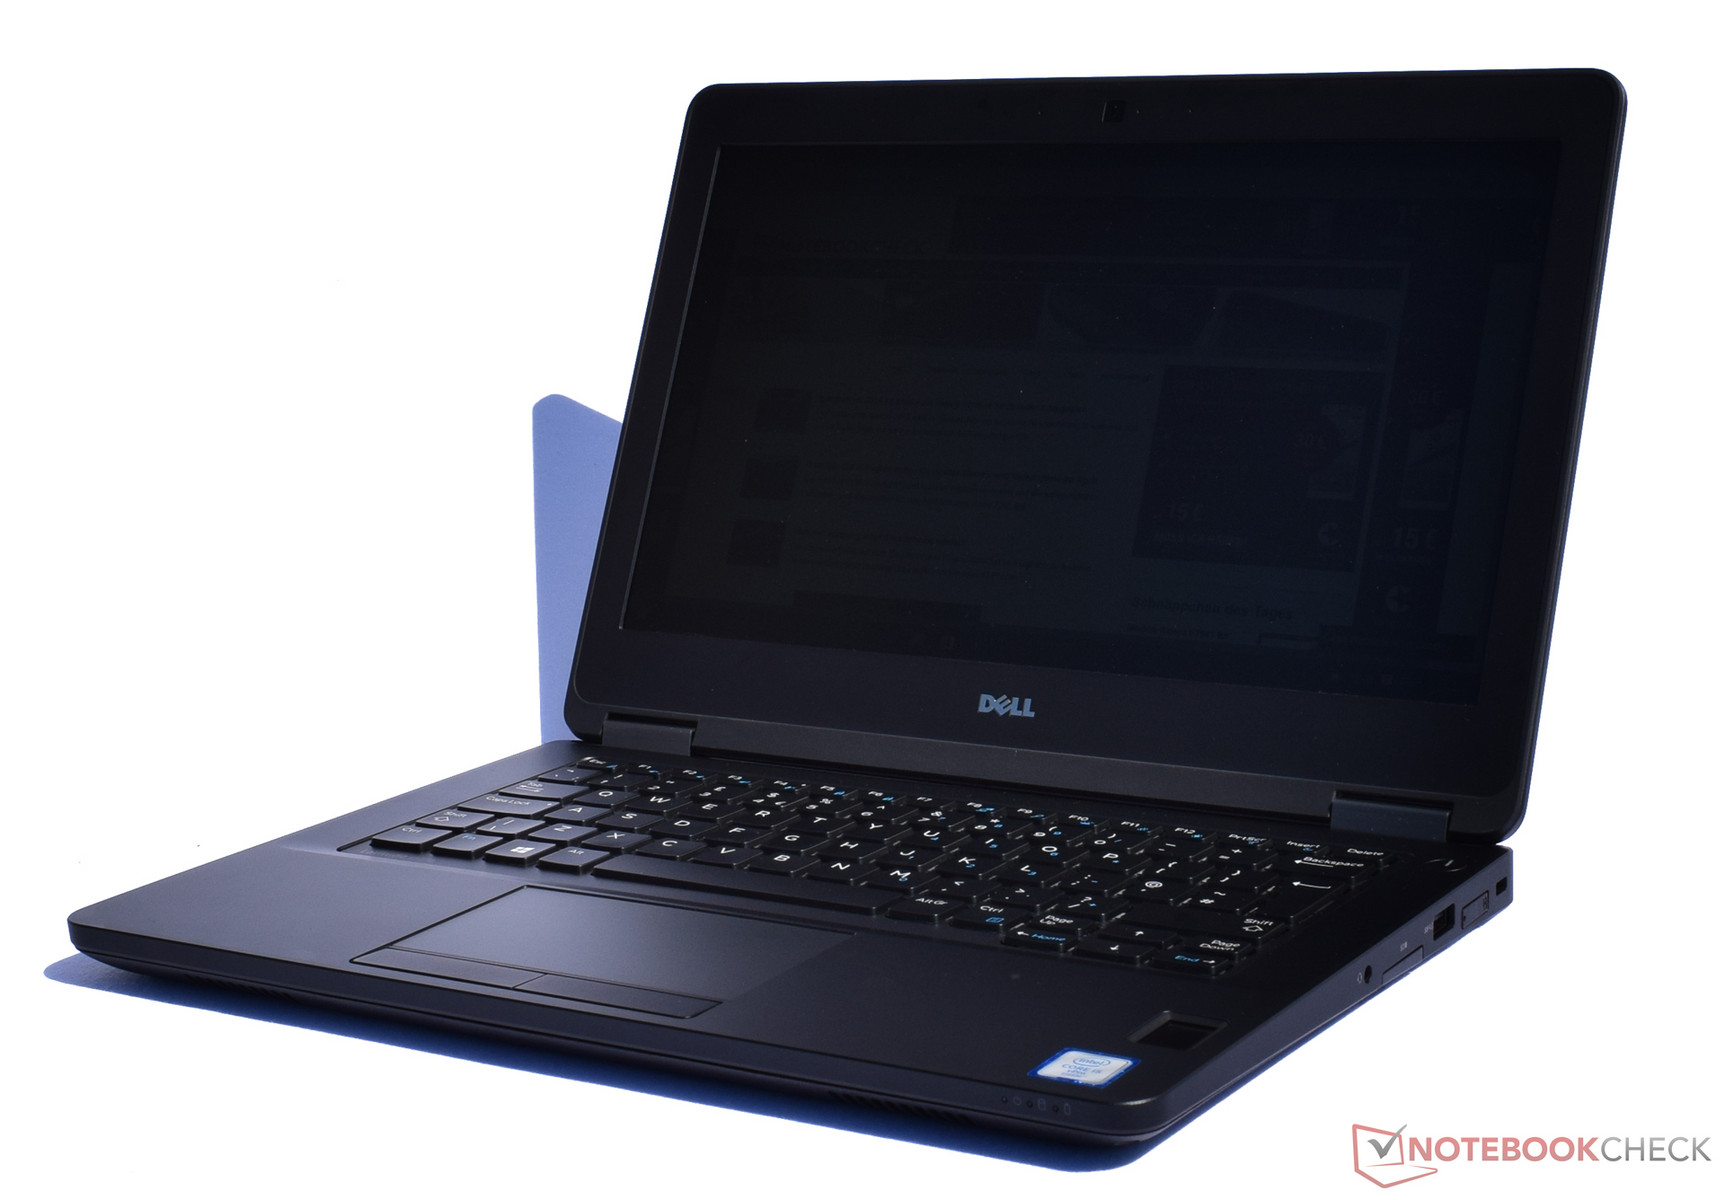 Dell Latitude 12 E5270 - Notebookcheck.net External Reviews